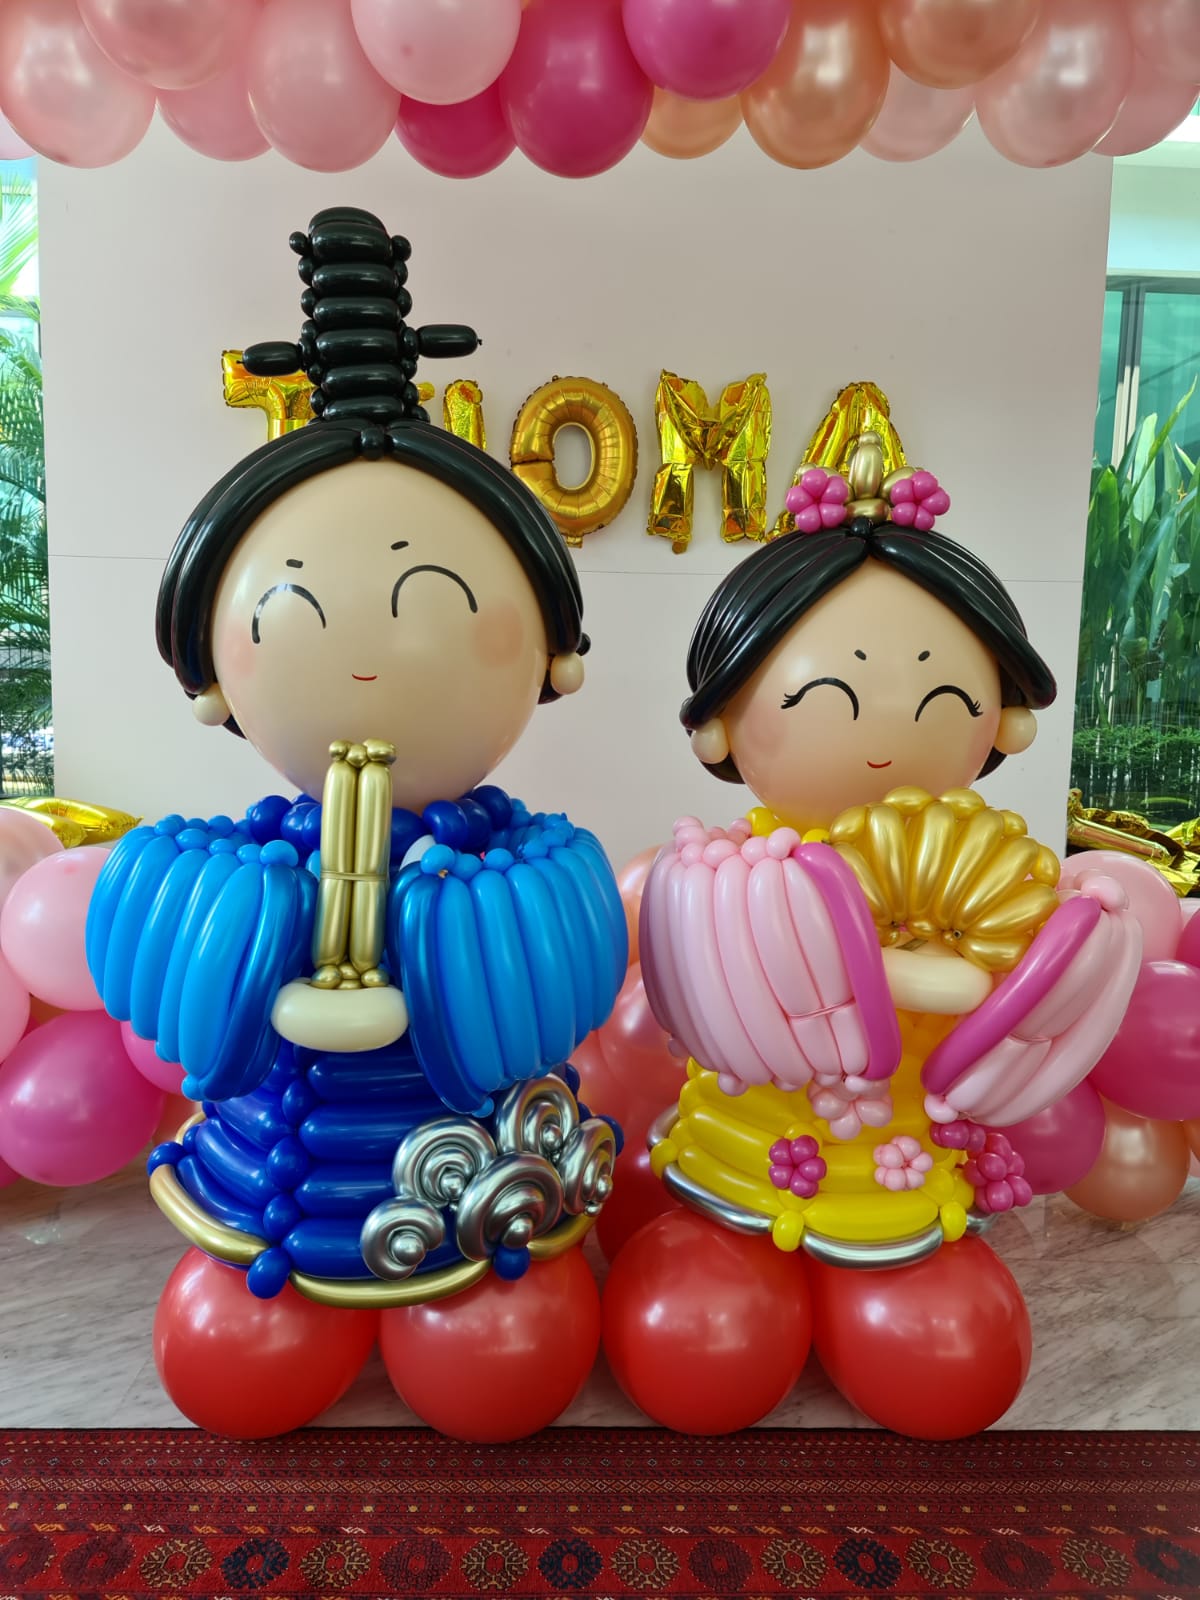 Balloon Prince and Princess Sculpture